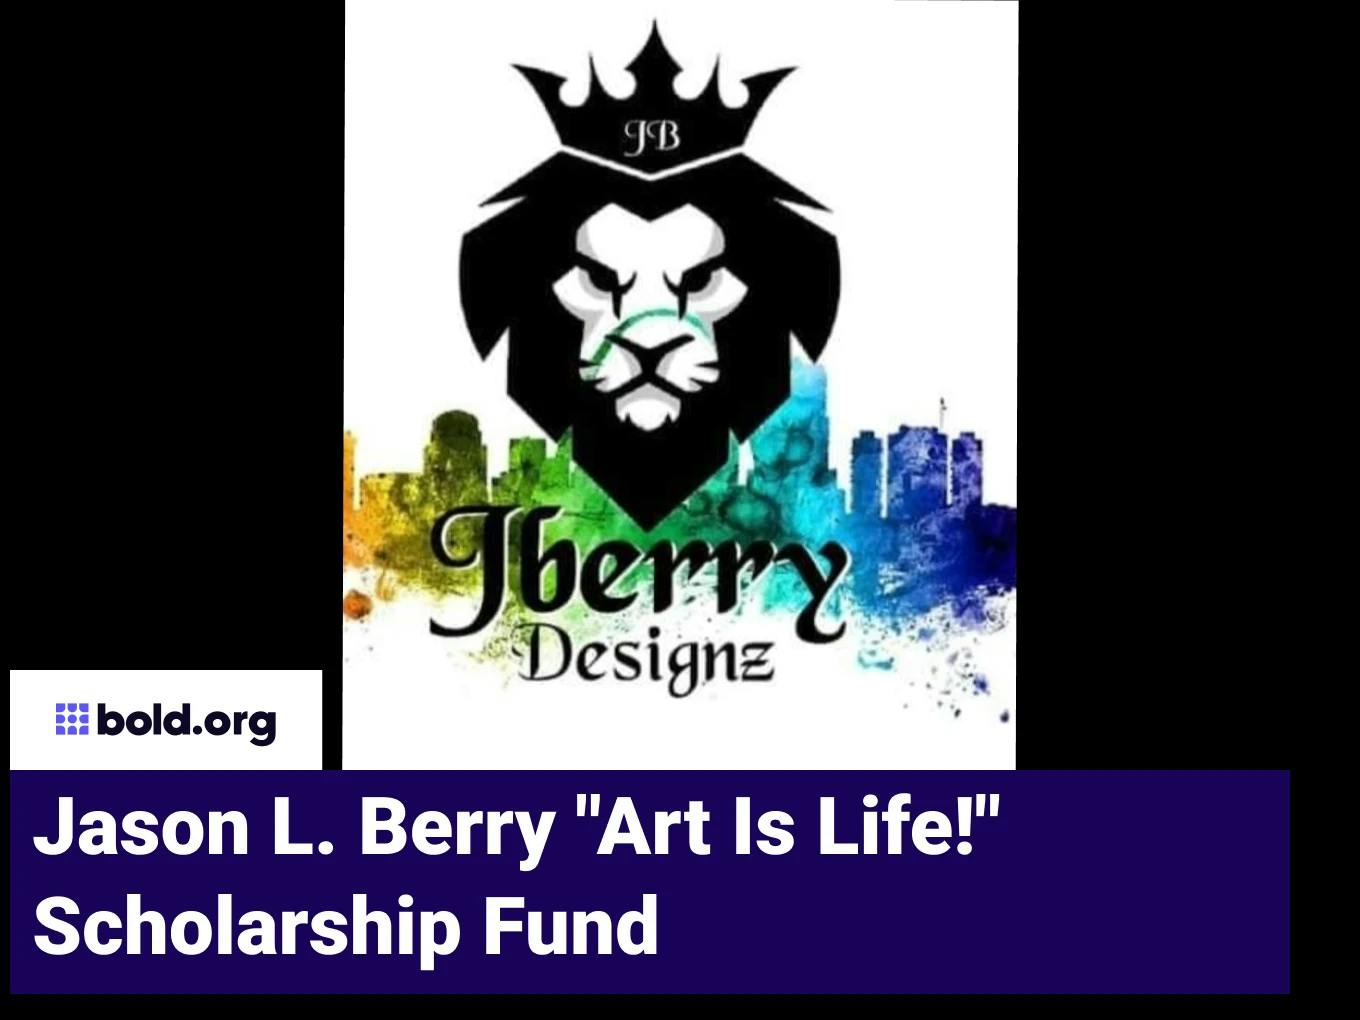 Jason L. Berry "Art Is Life!" Scholarship Fund